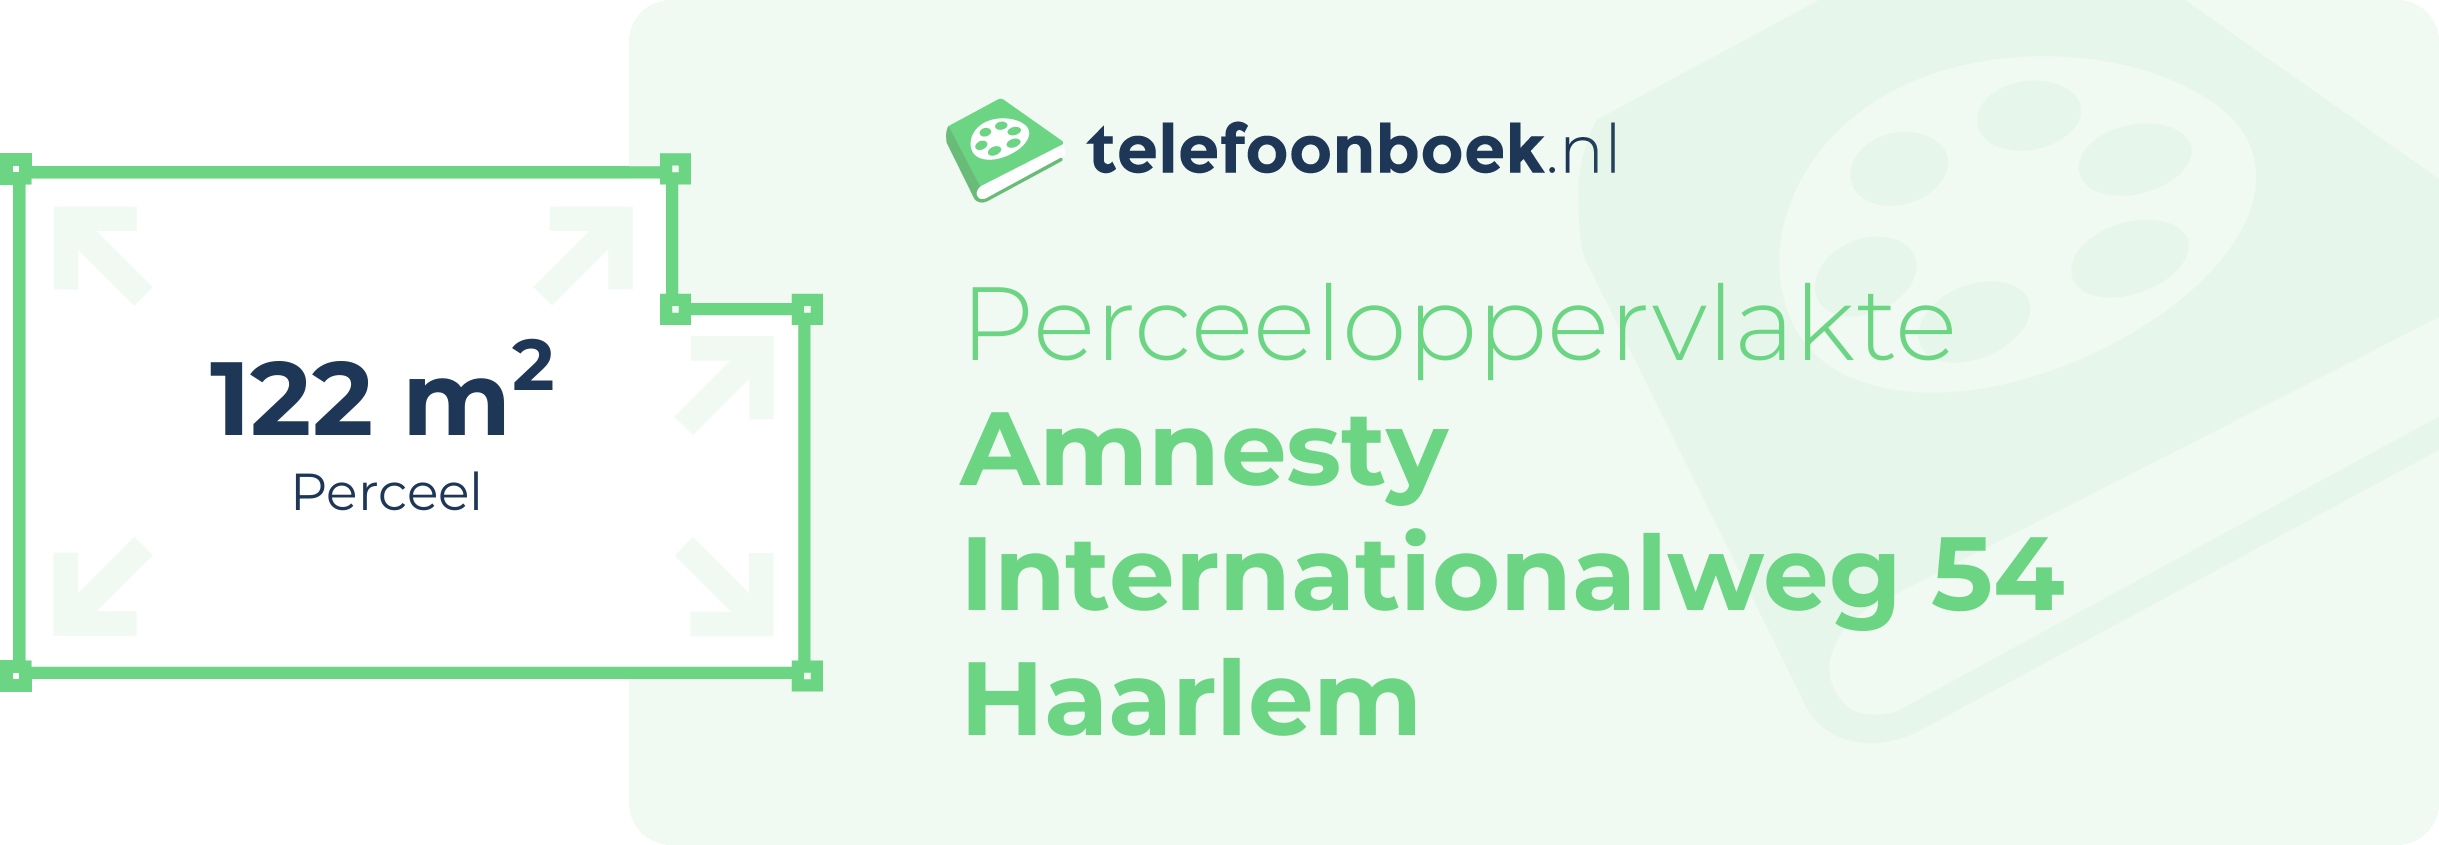 Perceeloppervlakte Amnesty Internationalweg 54 Haarlem